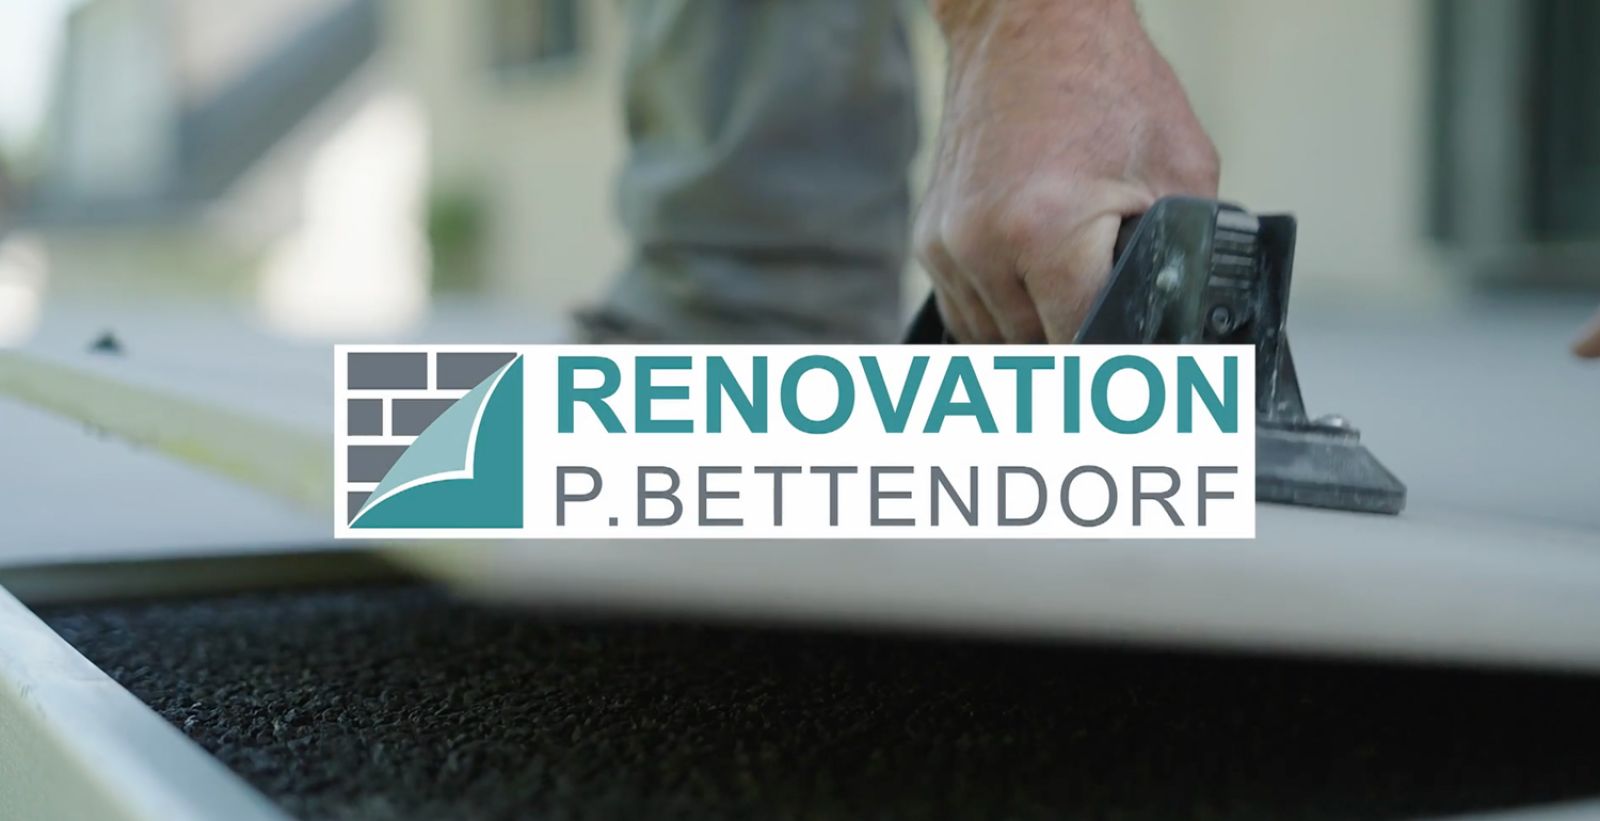 Rénovation Bettendorf 25 ans Video